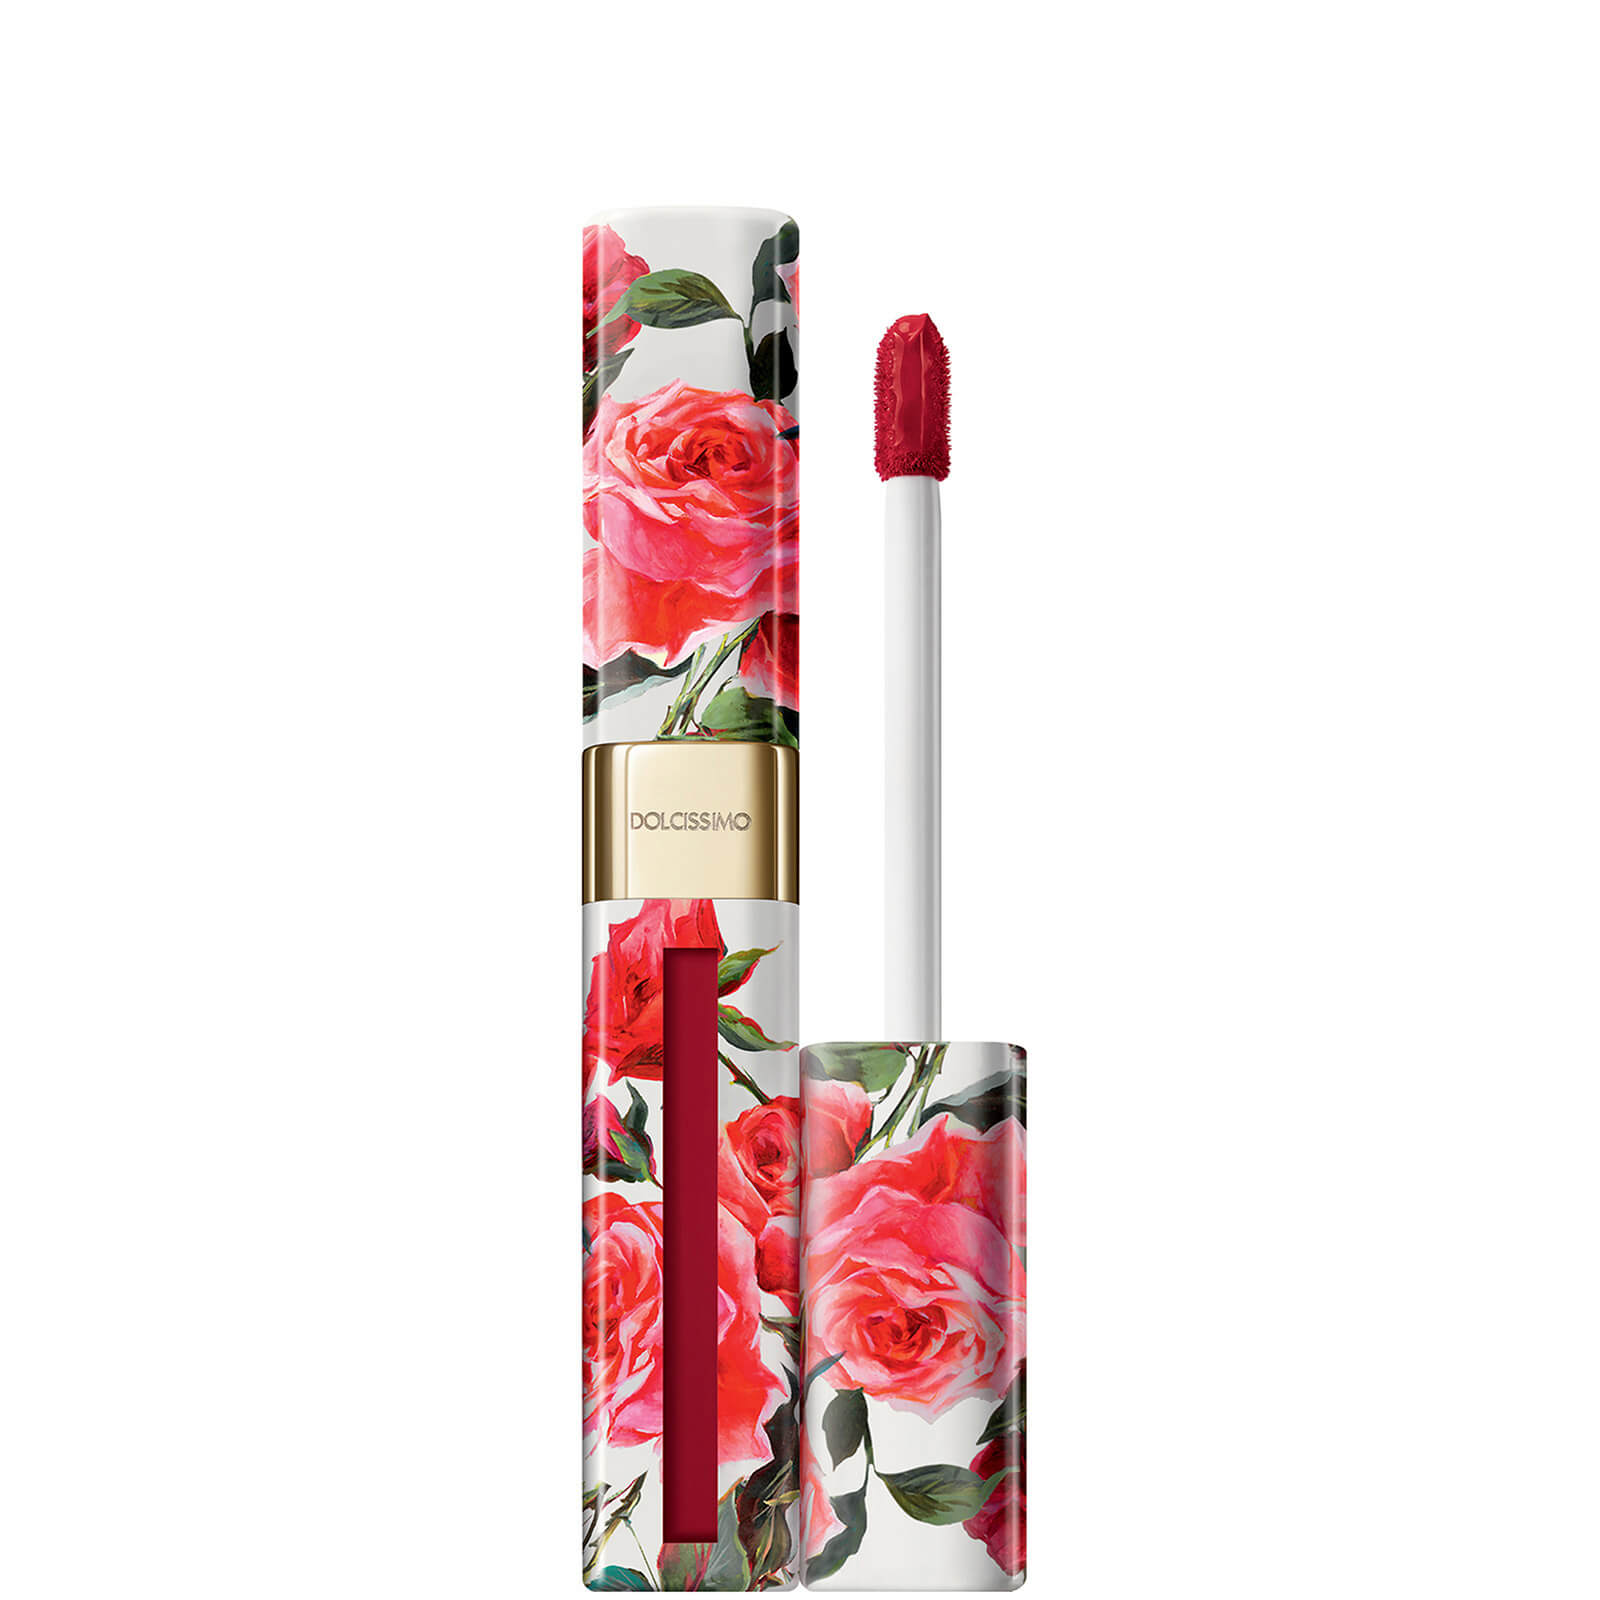 Dolce&Gabbana Dolcissimo Liquid Lipcolour 5ml (Various Shades) - Red 08